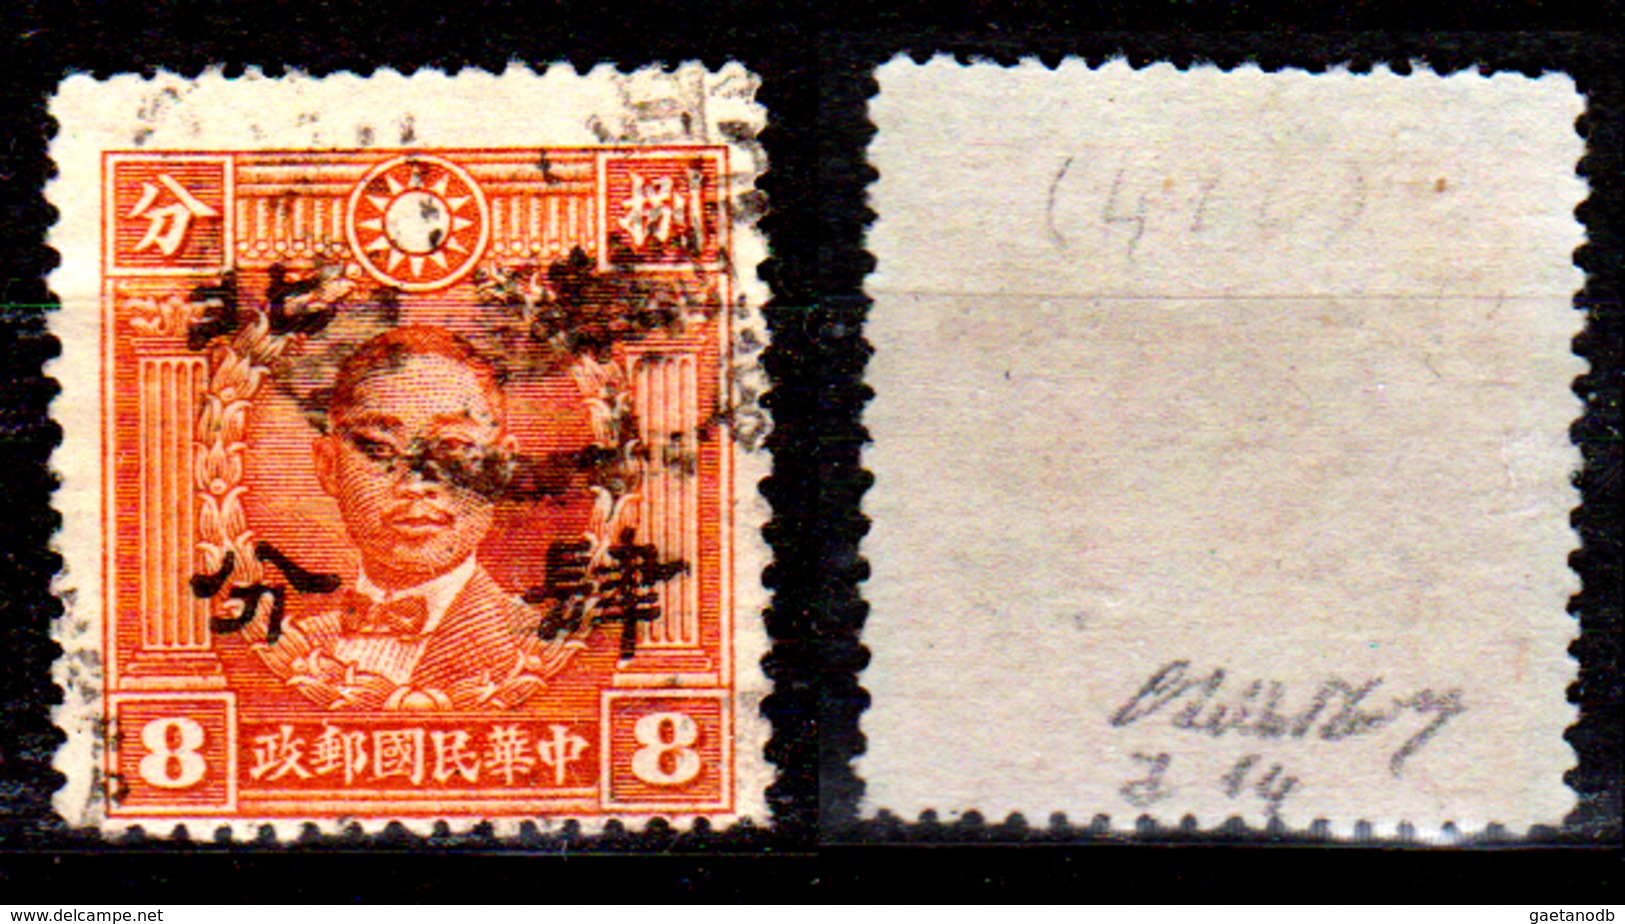 Cina-F-578 - Soprastampa "Hwa Pei" (Cina Del Nord) 1942 - Michel N. 292 - Senza Difetti Occulti. - 1941-45 Northern China